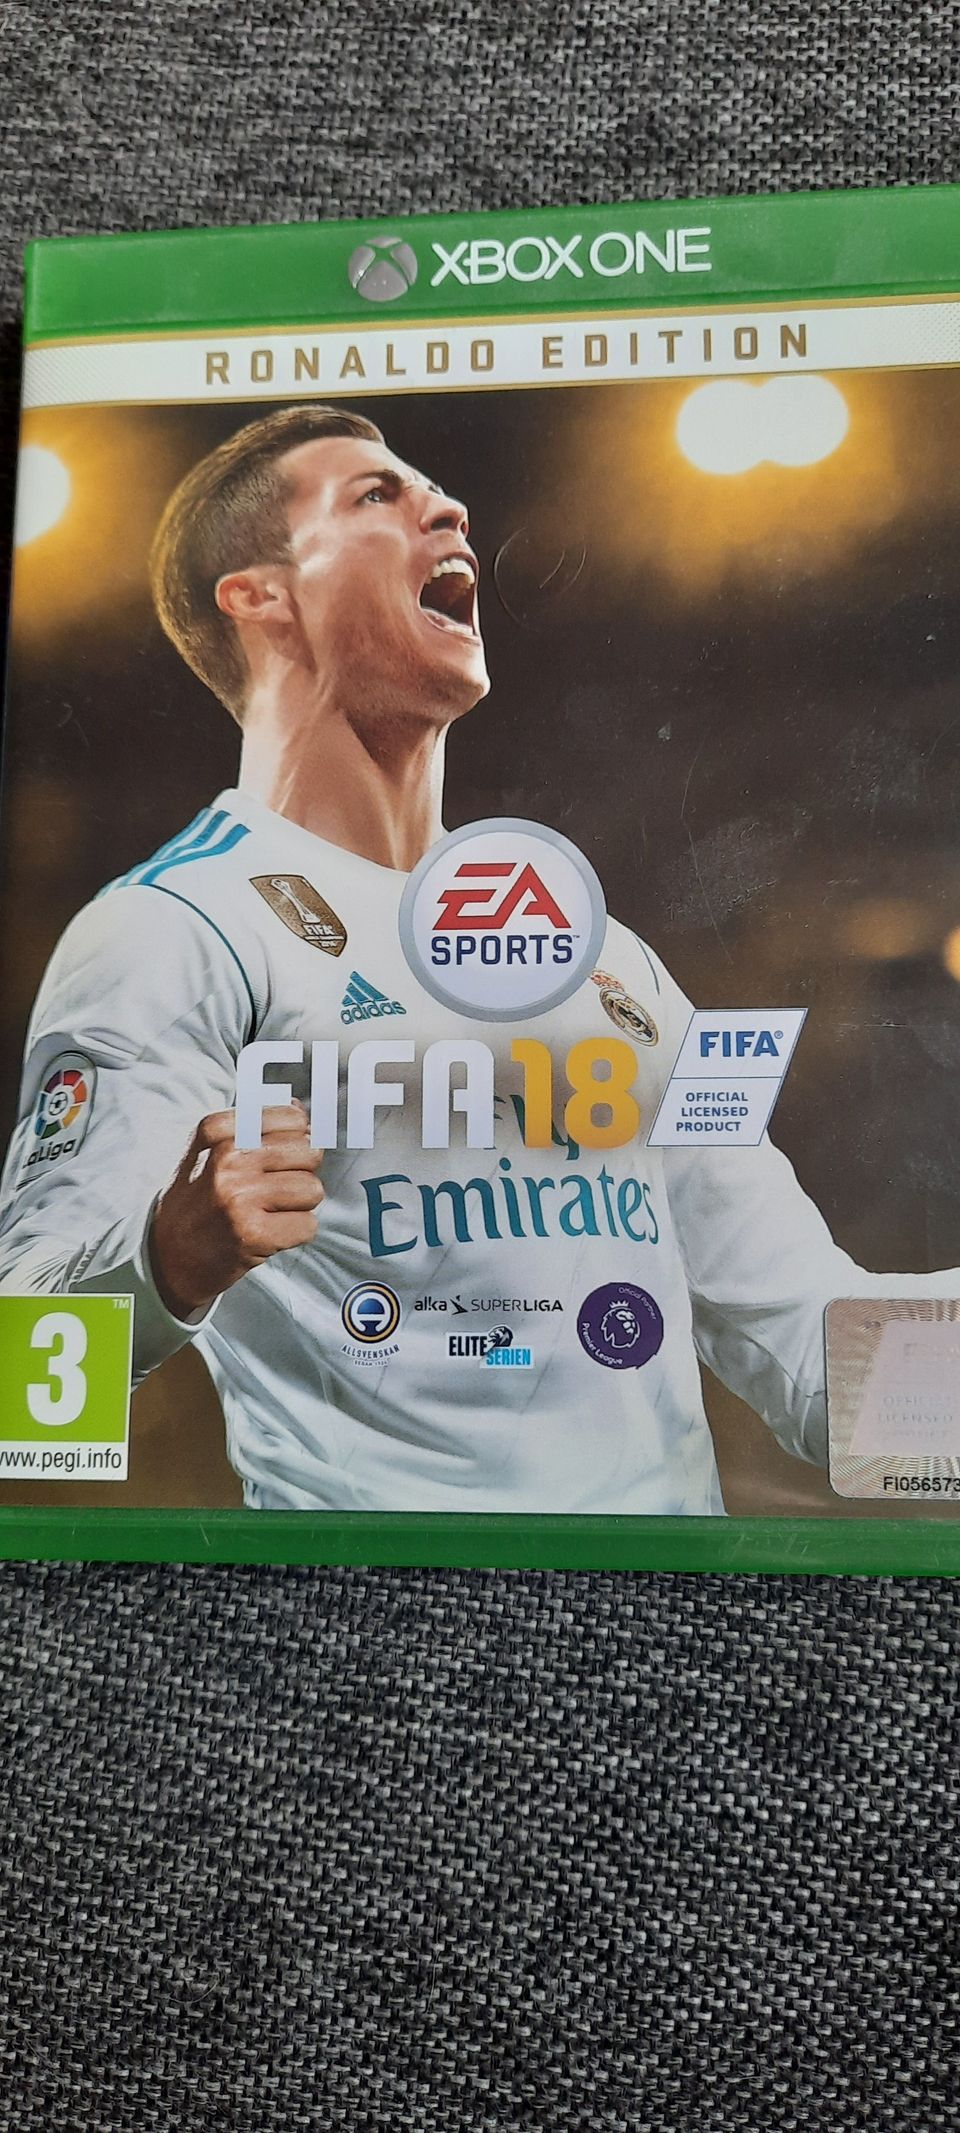 XBOXONE: FIFA 18